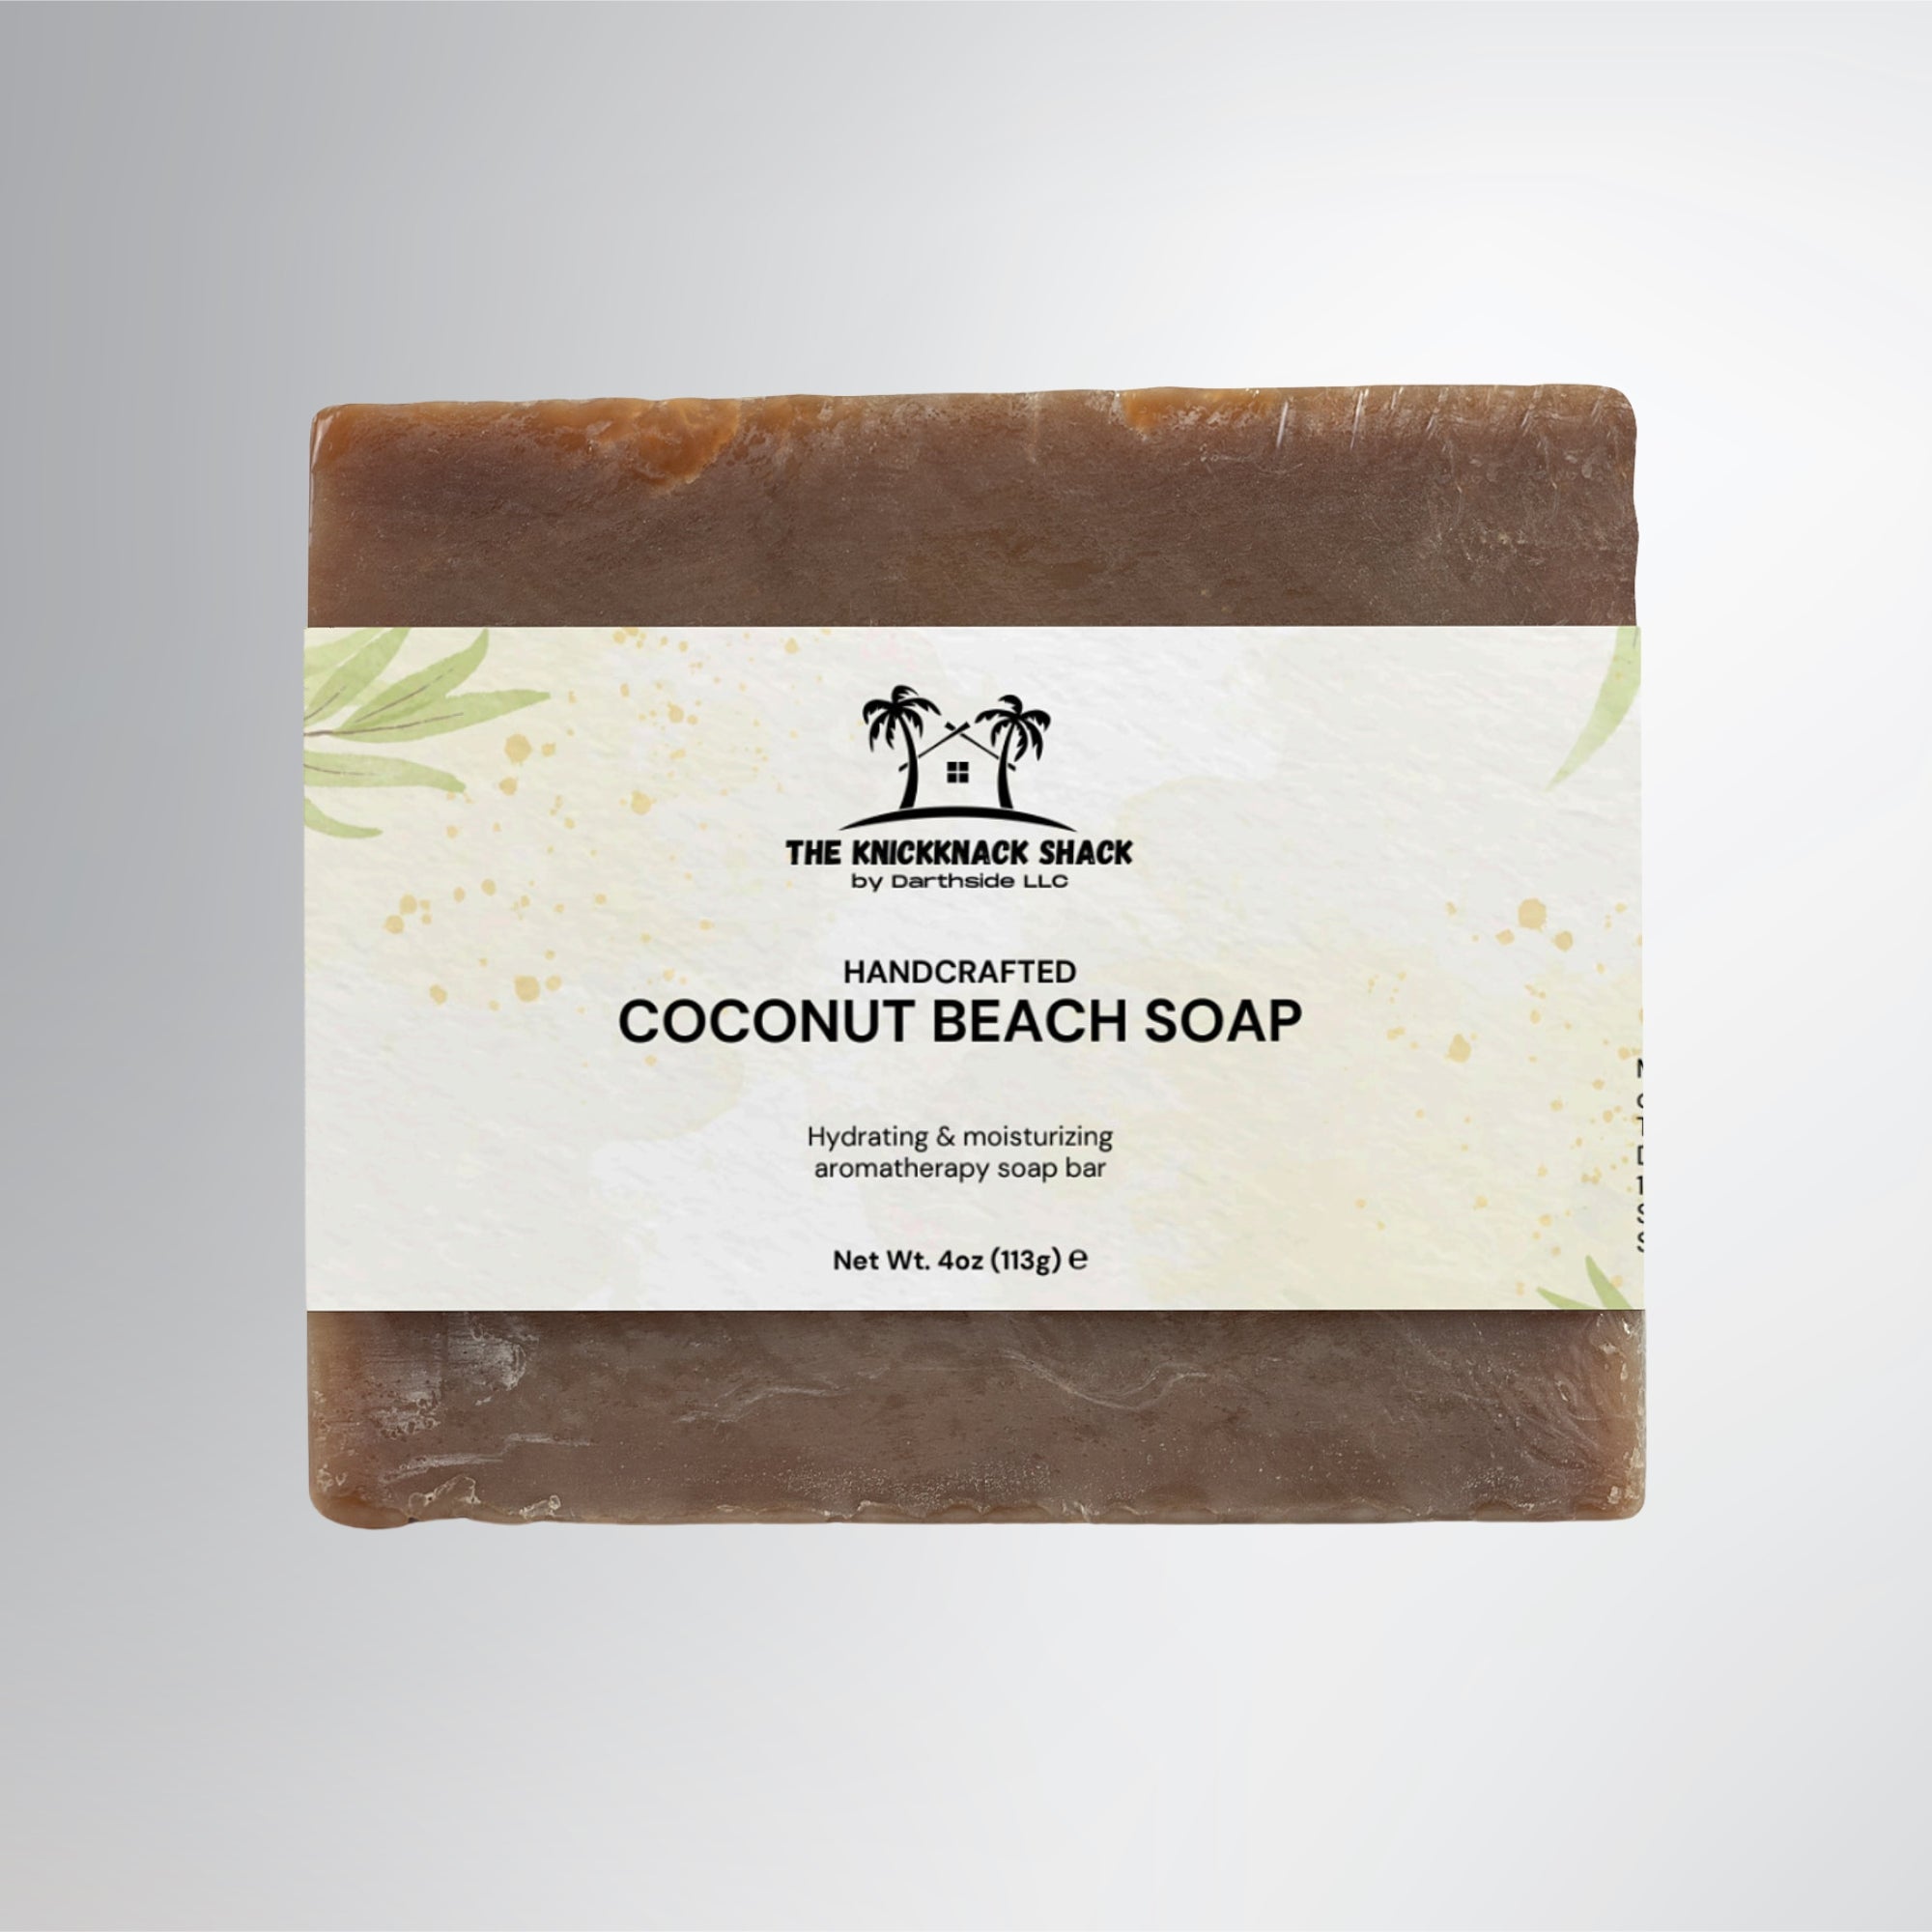 Coconut Beach Soap